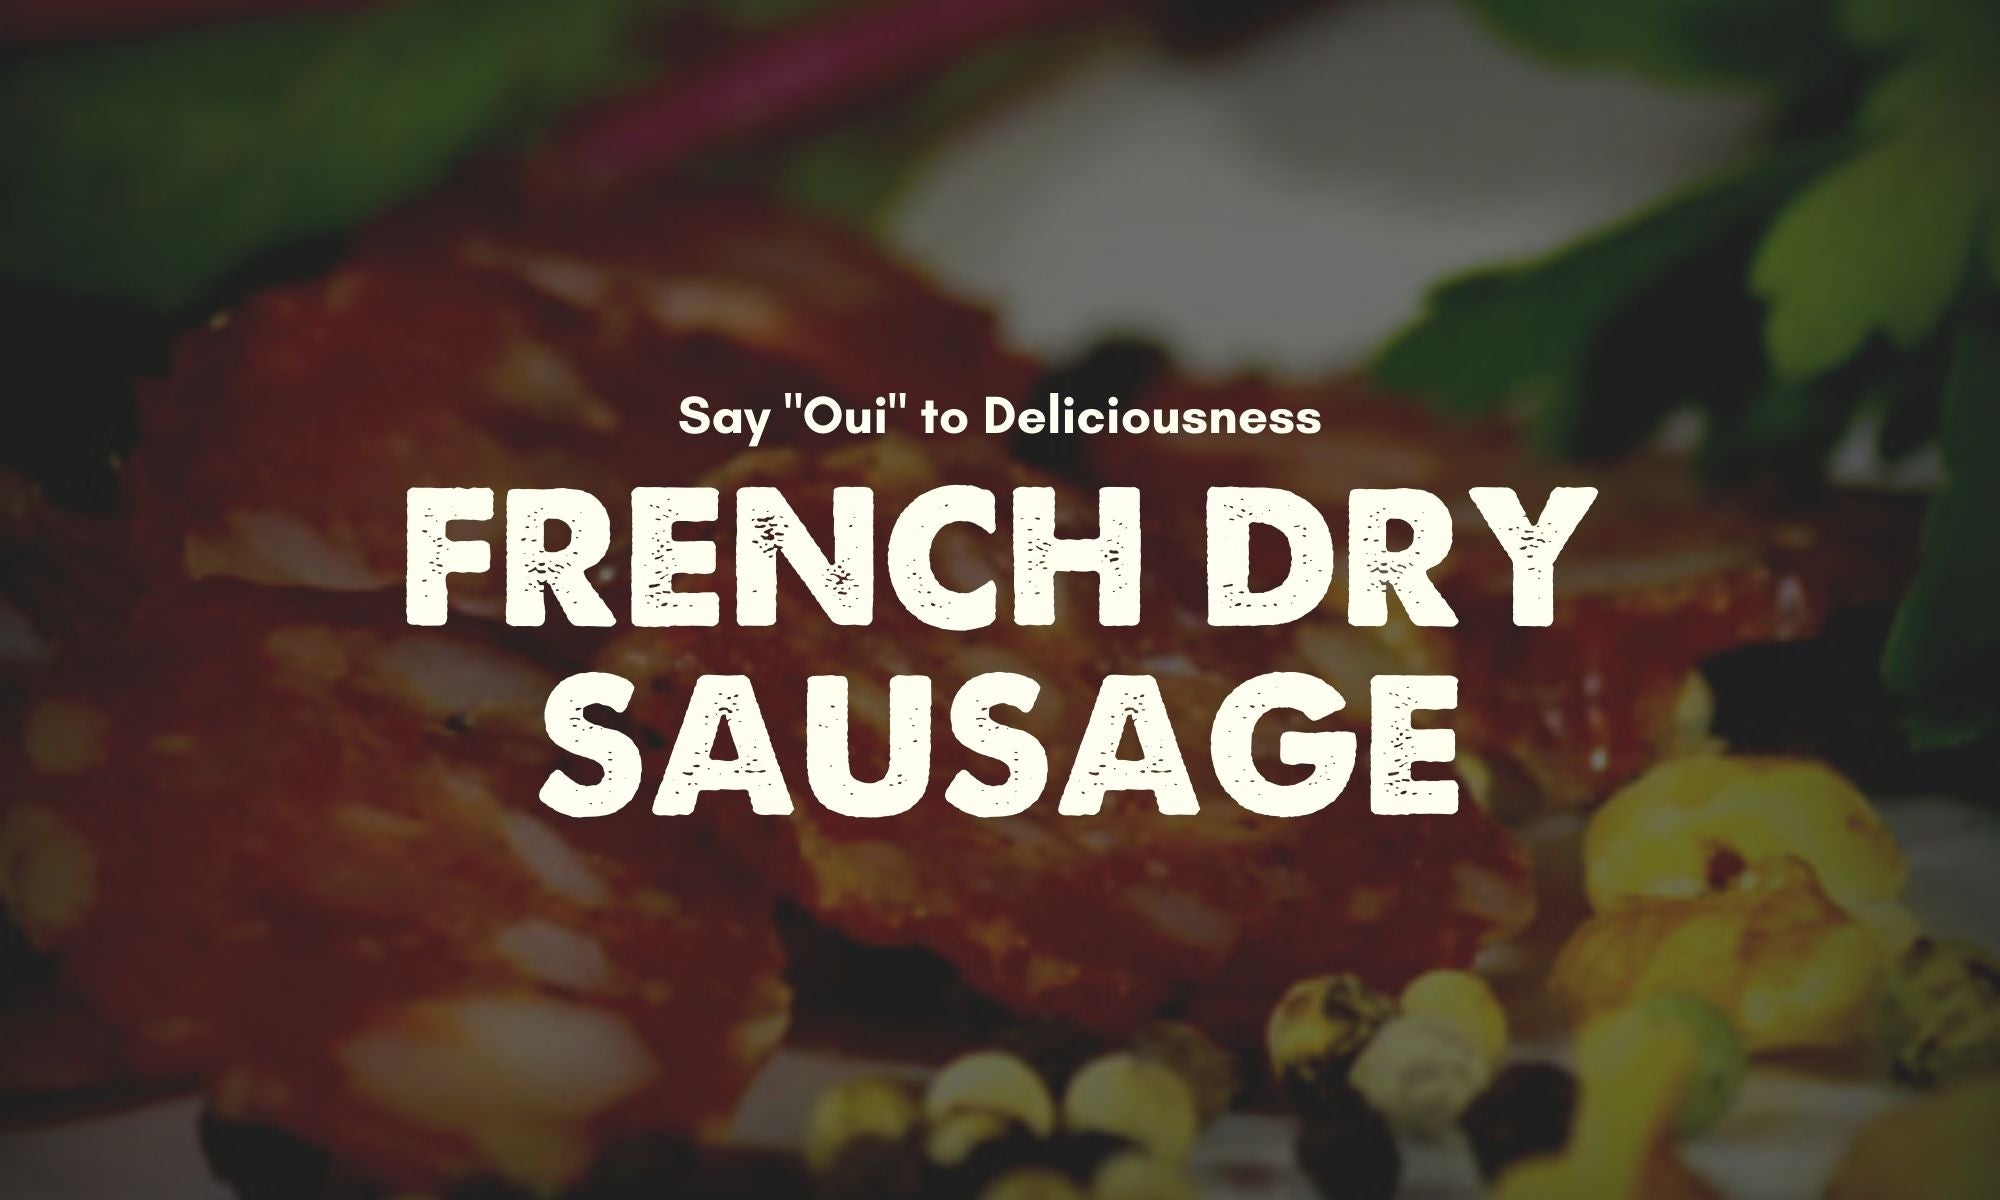 Saucisson Sec - French-Style Salami